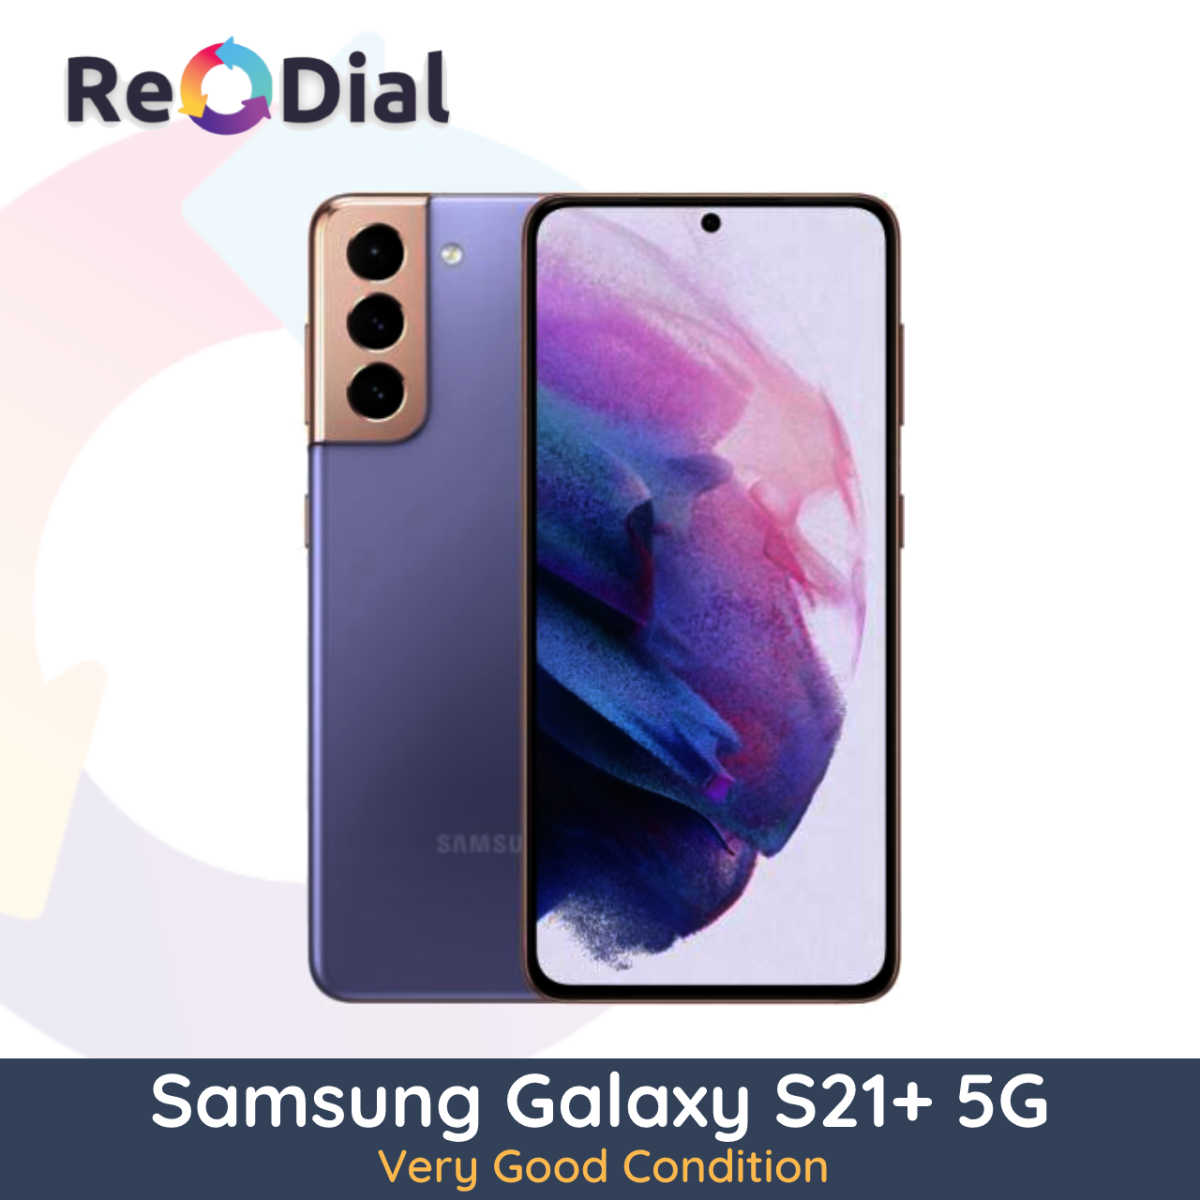 Samsung Galaxy S21+ 5G - Very Good Condition